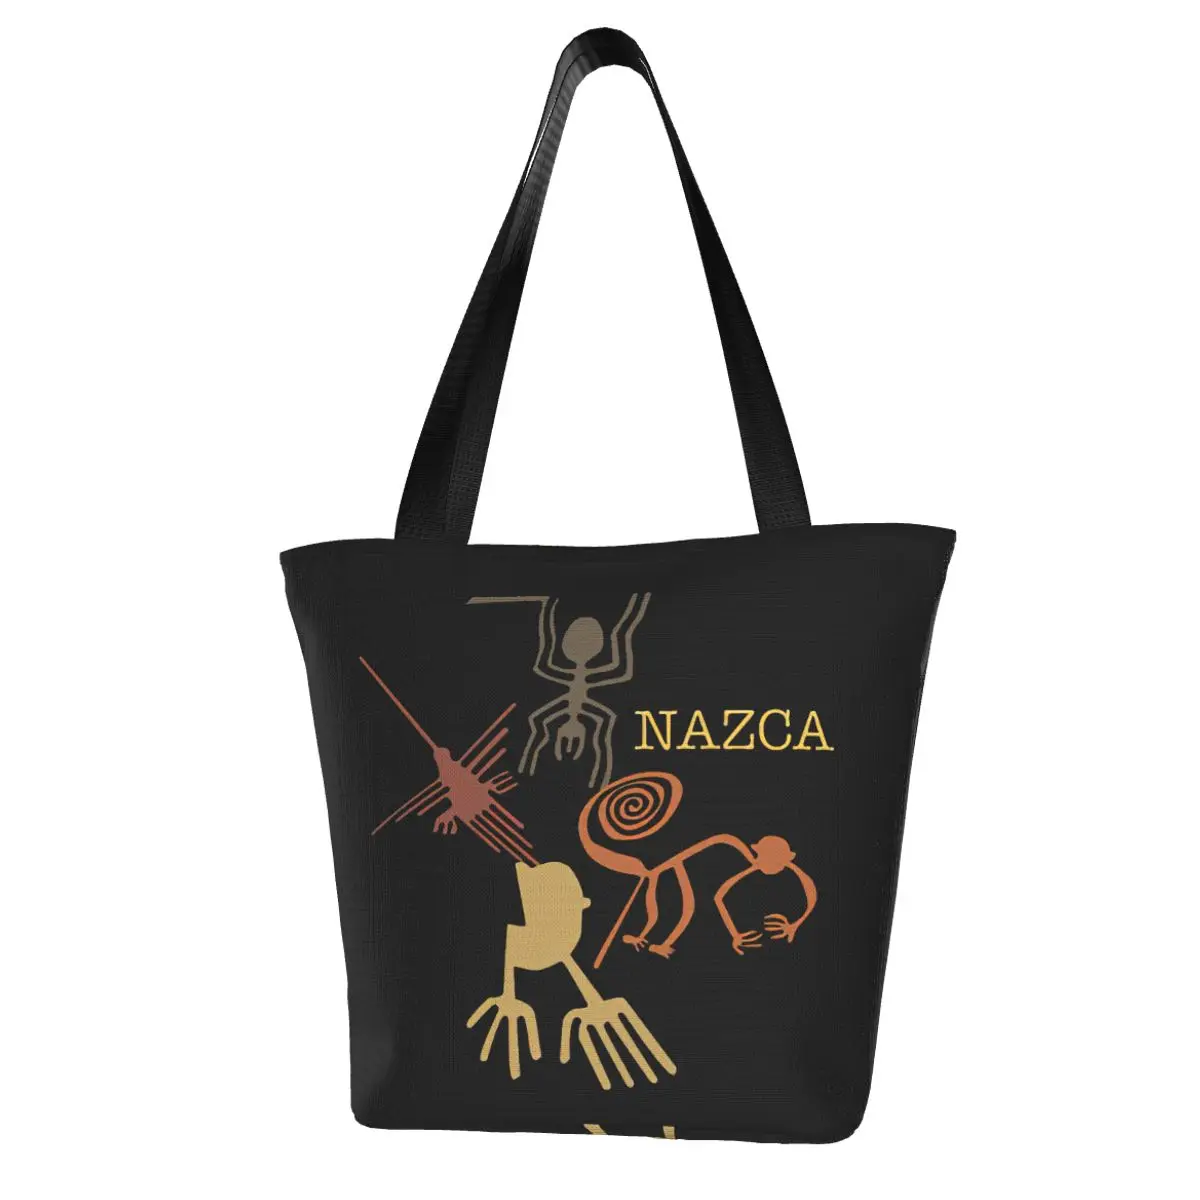 Nazca Line Peru, Peruvian Peru Shopping Bag Aesthetic Cloth Outdoor Handbag Female Fashion Bags